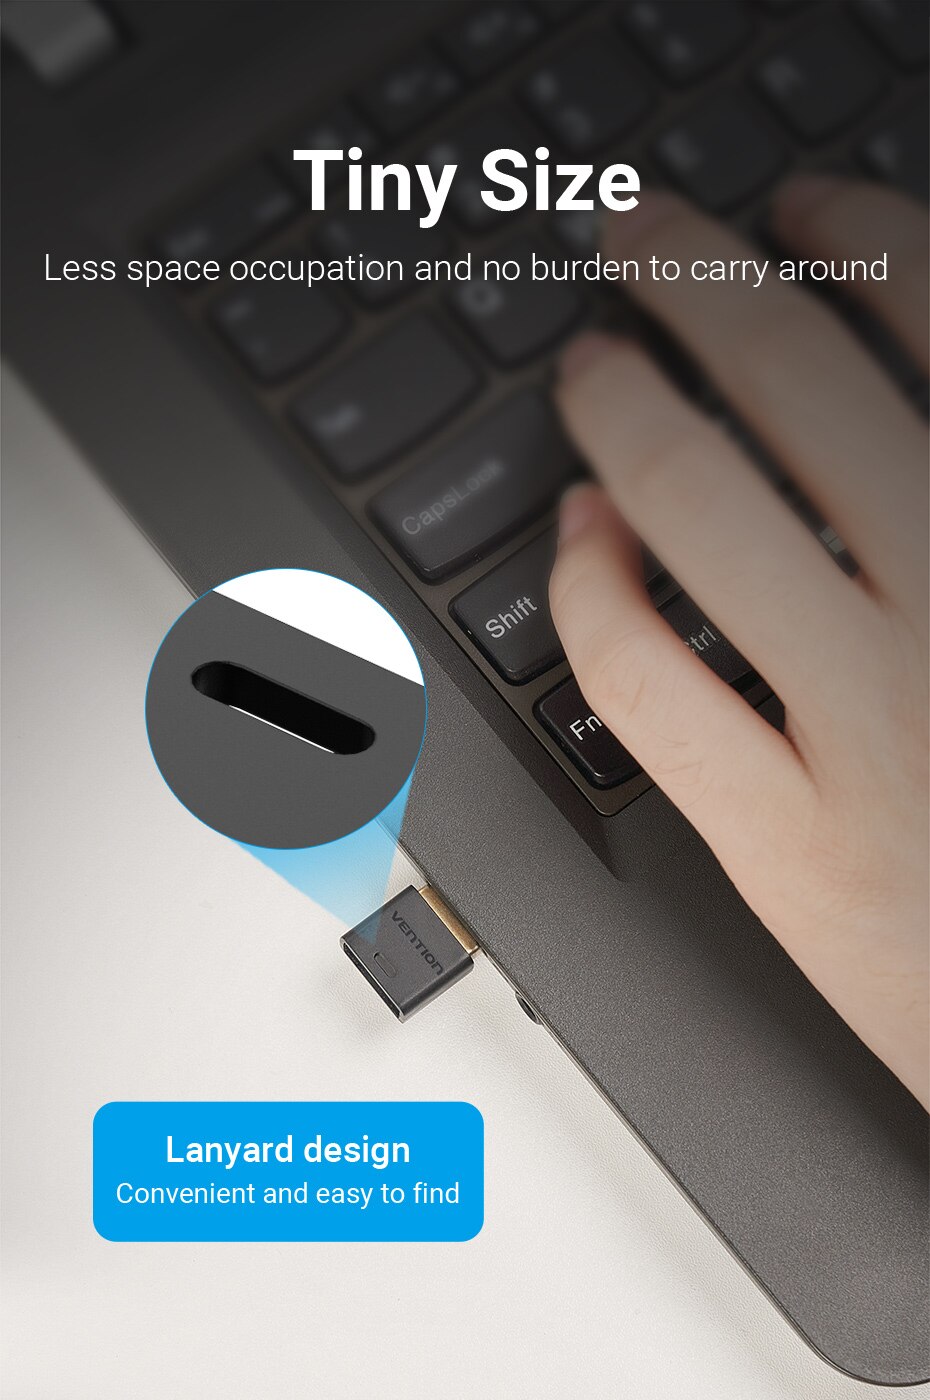 Bluetooth 5.0 USB Dongle, Black, AYOUB COMPUTERS